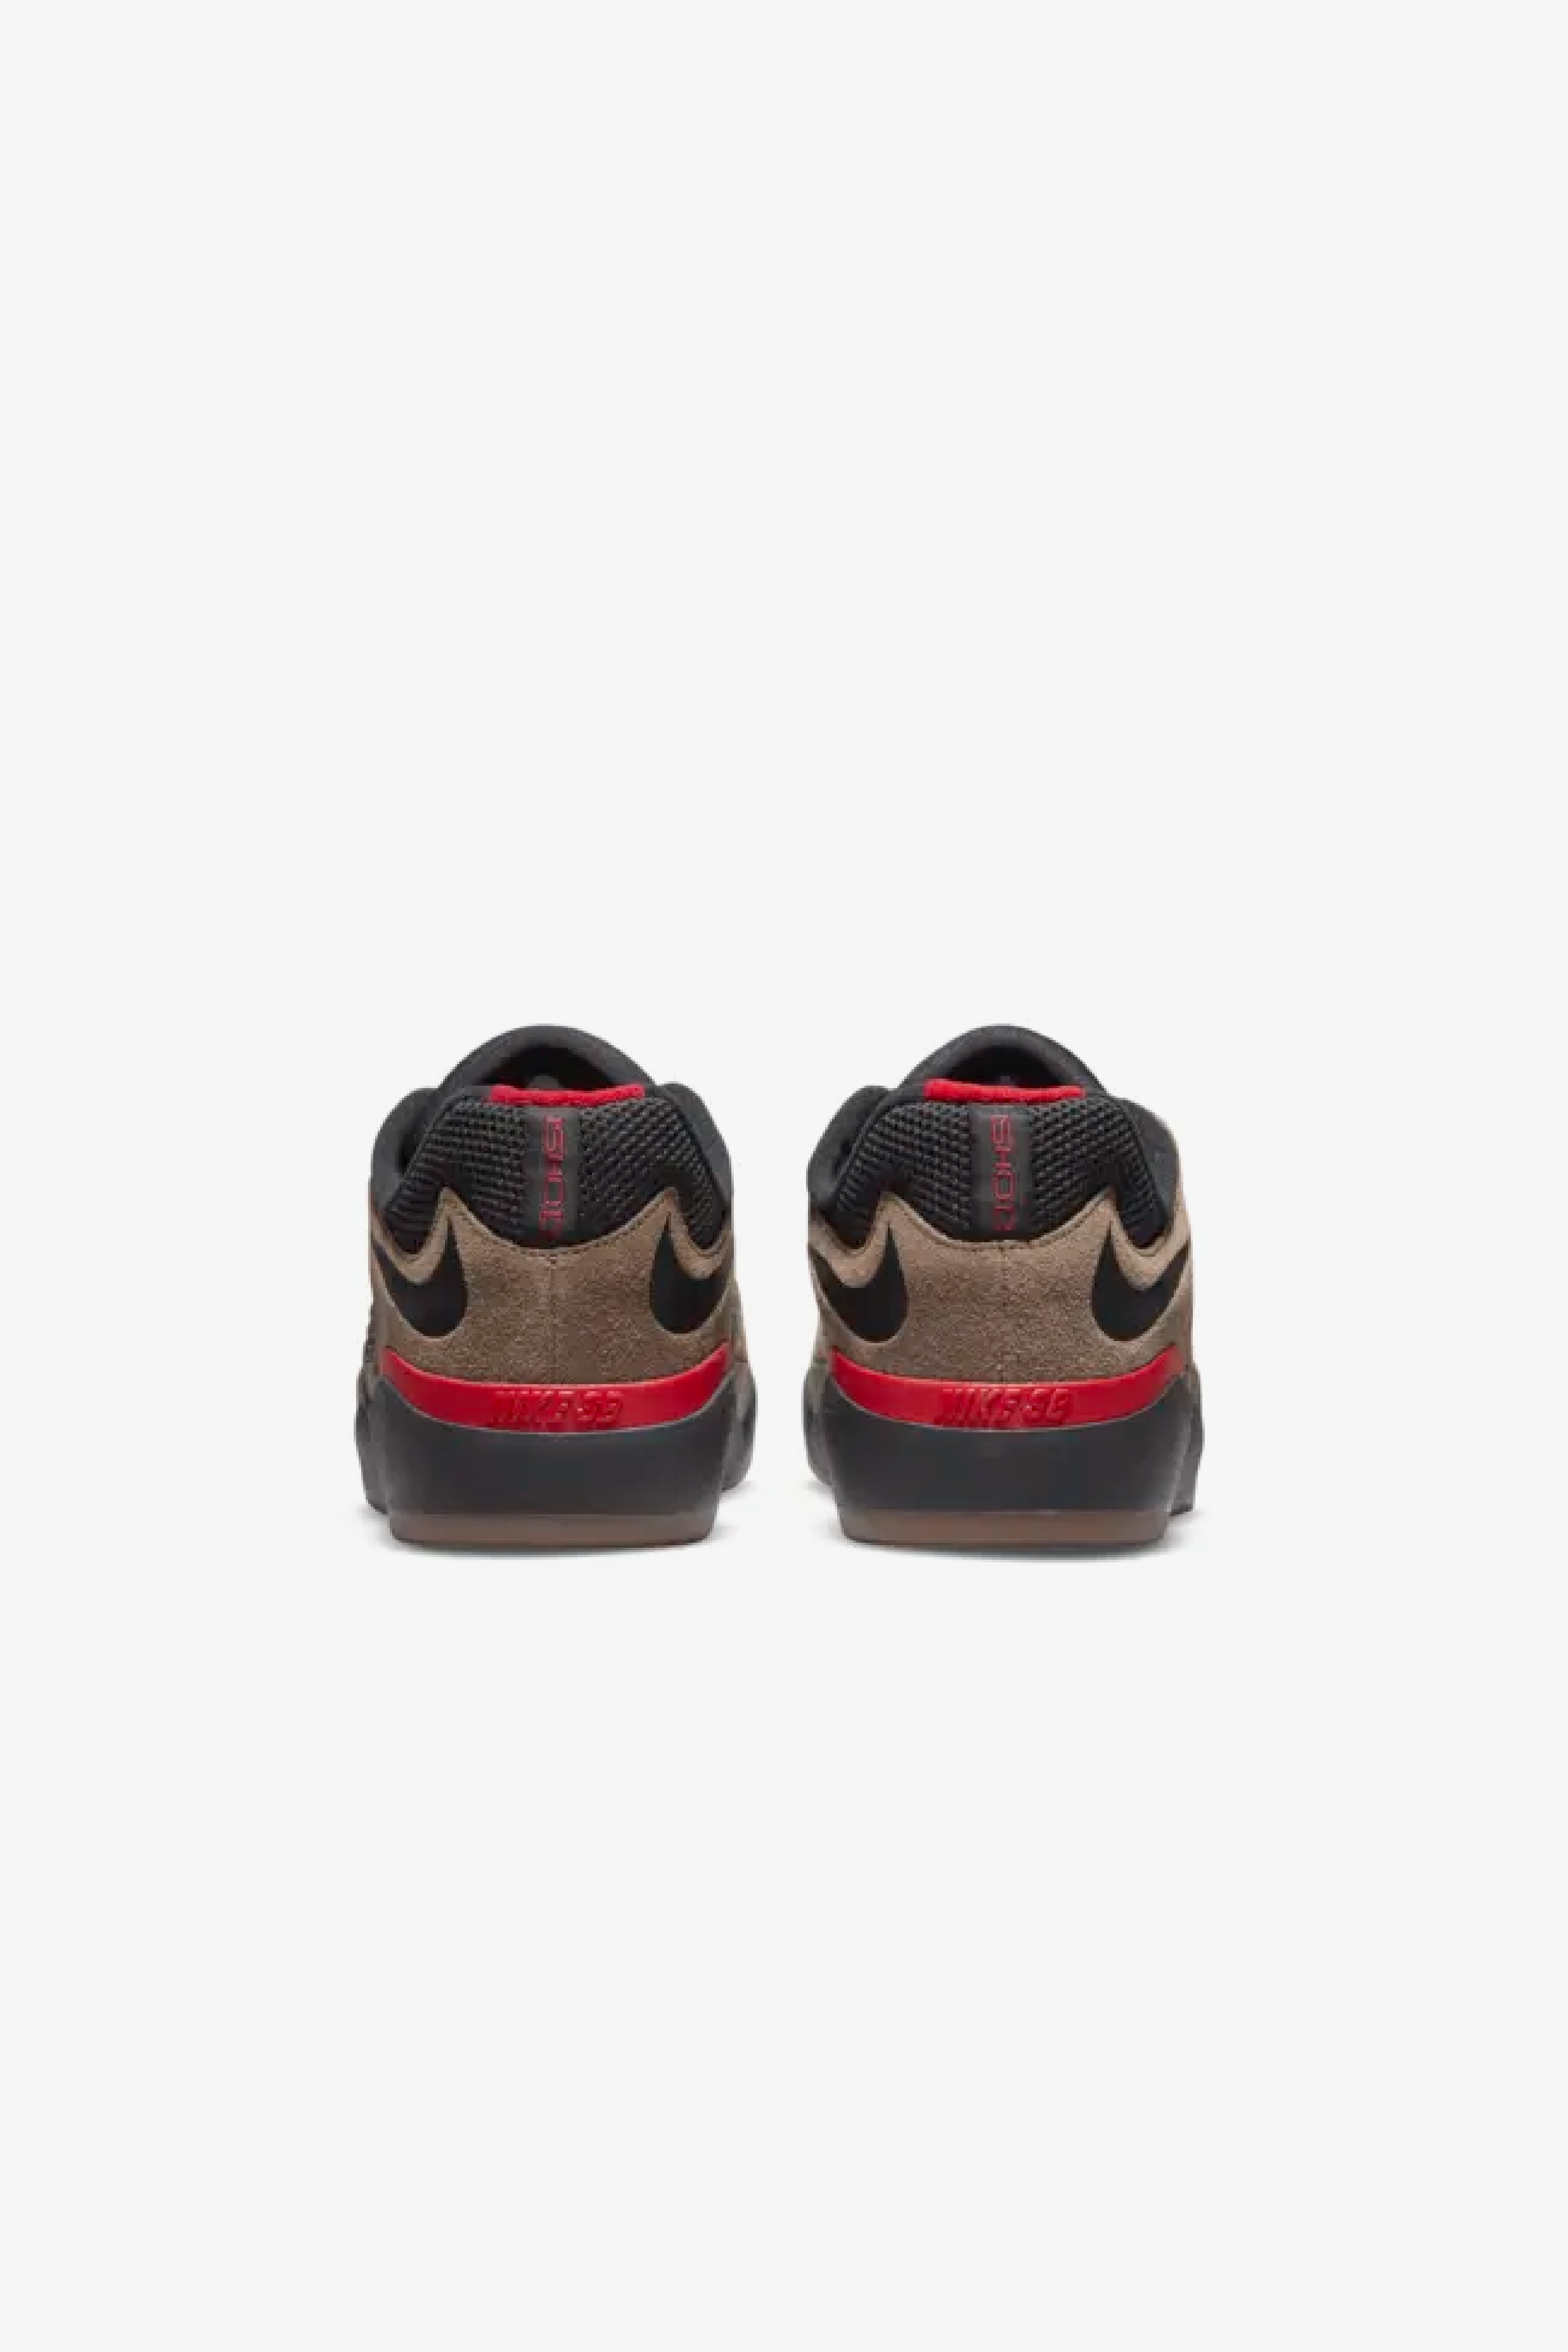 Selectshop FRAME - NIKE SB Nike SB Ishod  "Light Olive" Footwear Dubai